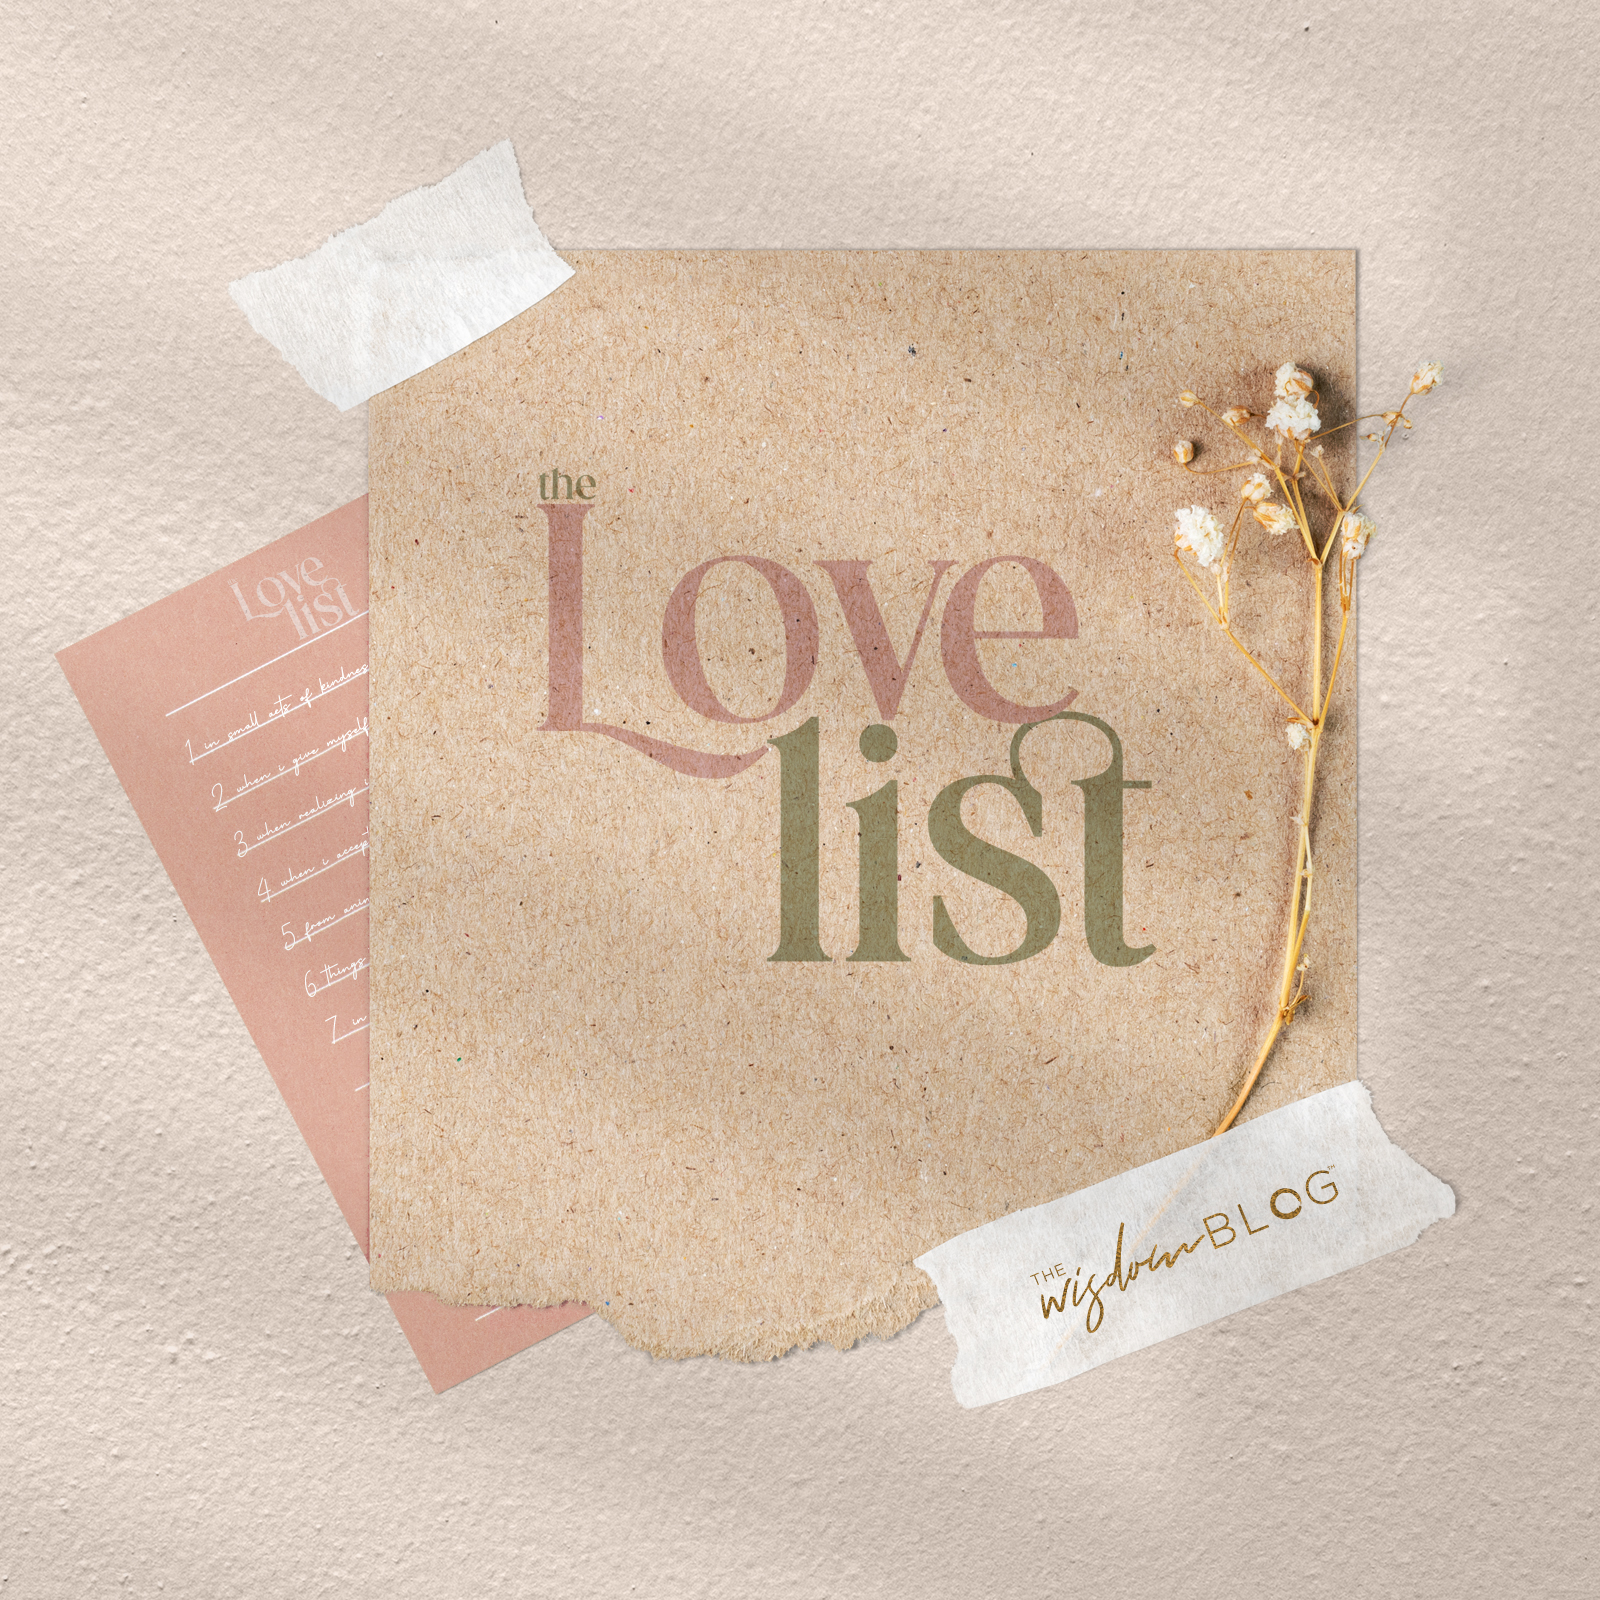 The Love List ~ The Wisdom Blog with dorothy zennuriye juno (art and the love list)